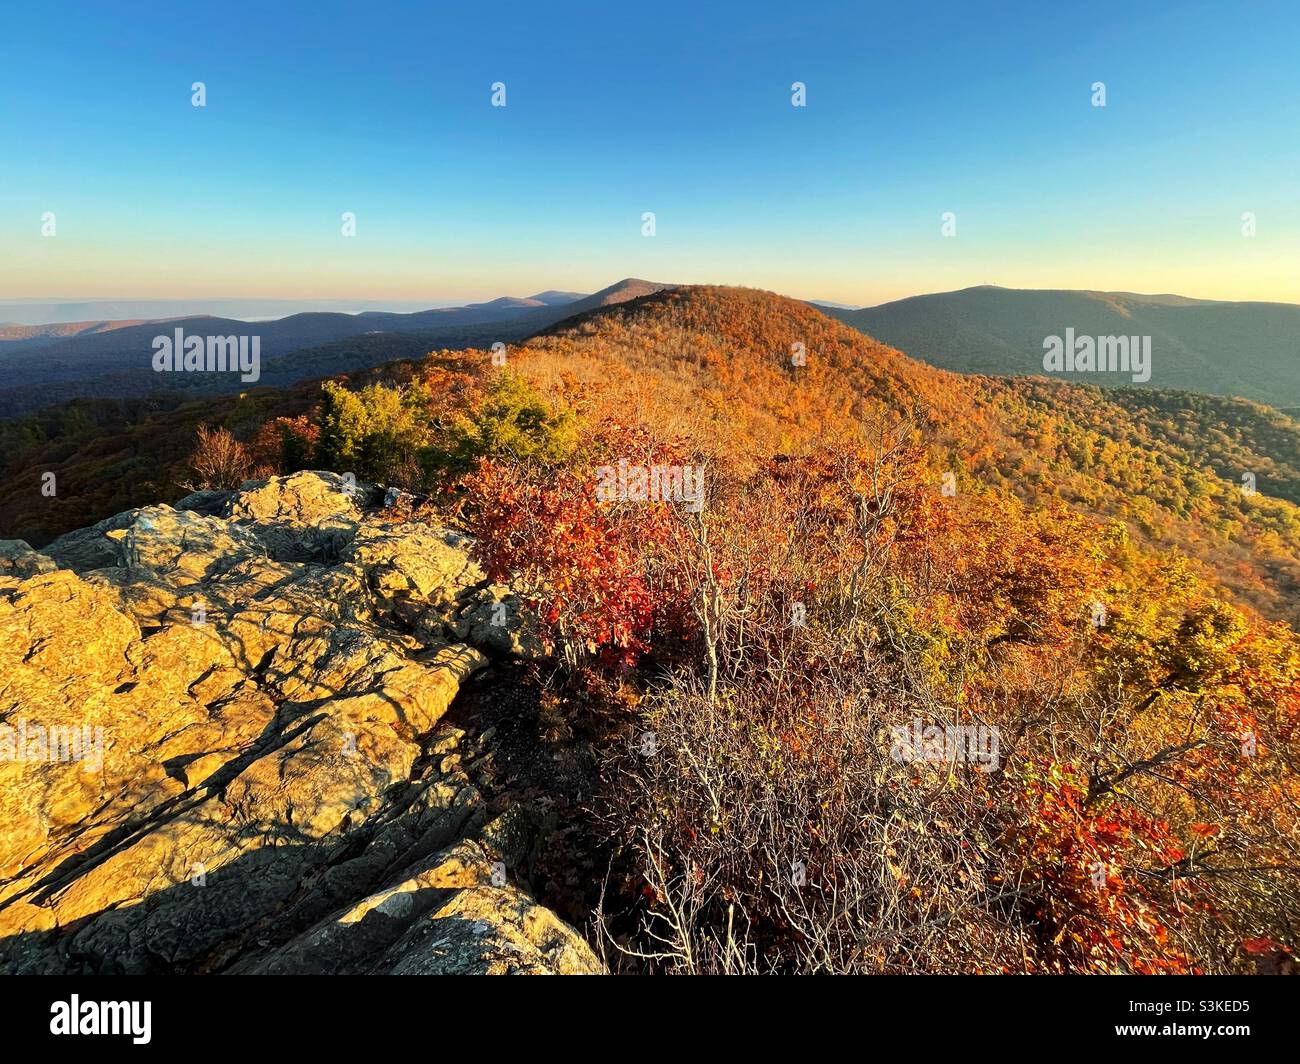 Sunrise along the Appalachian mountains in Virginia during peak fall foliage. Stock Photo